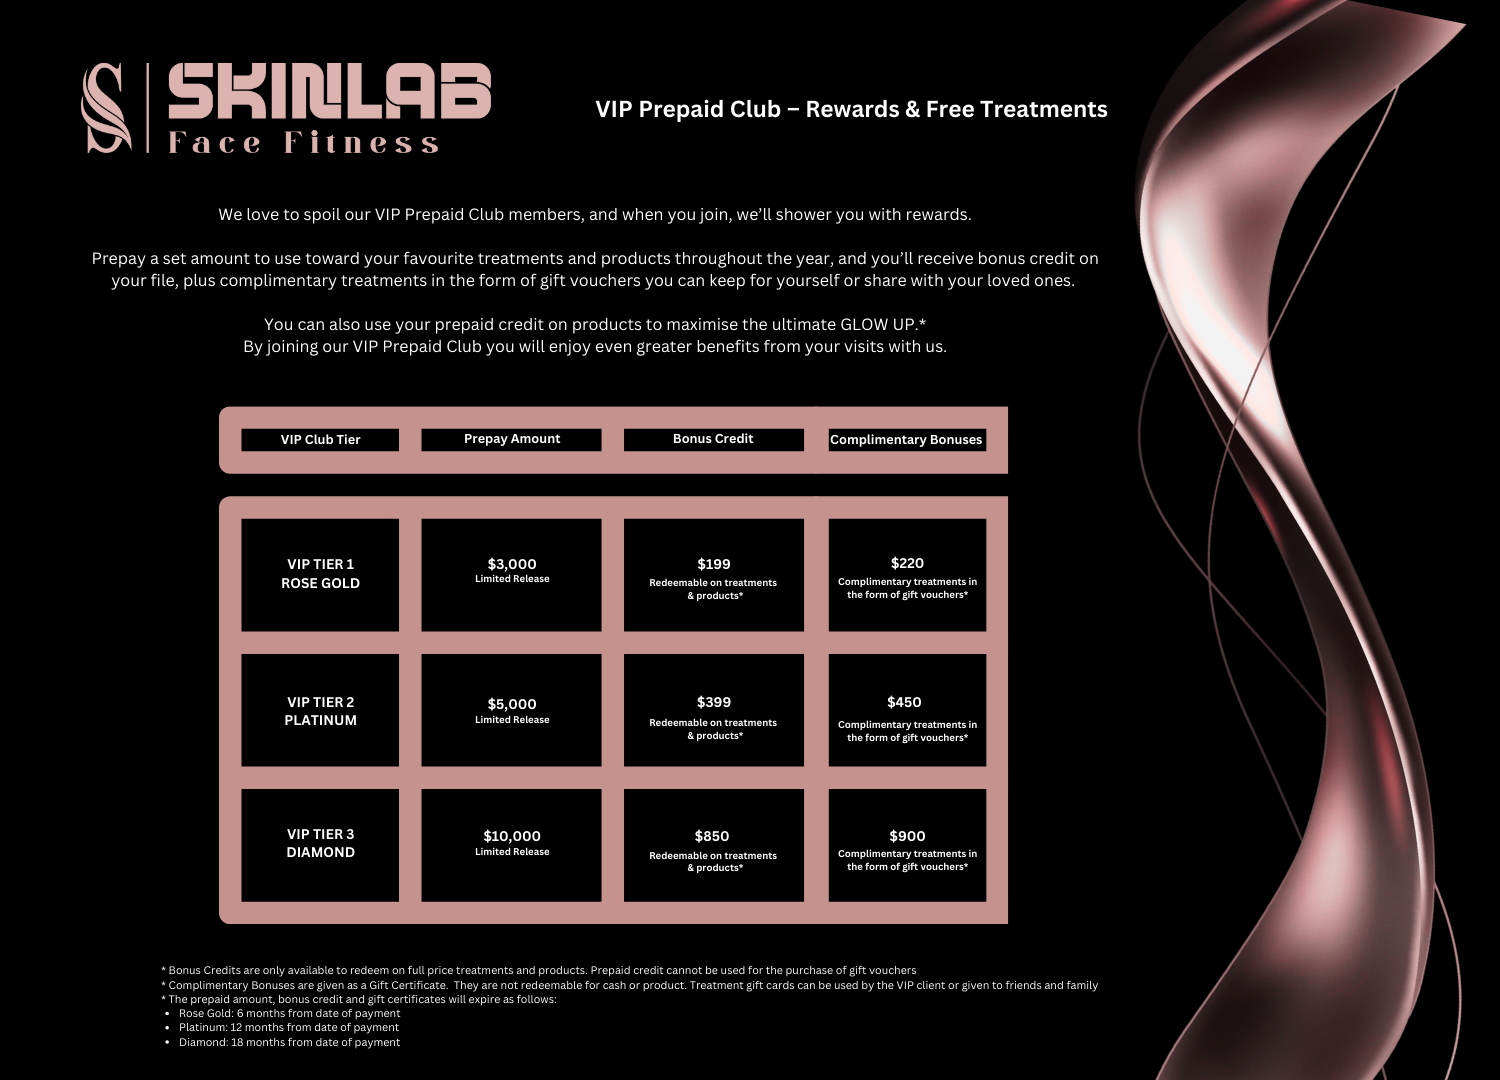 VIP Prepaid Club SKINLAB - Rewards and complimentary treatments